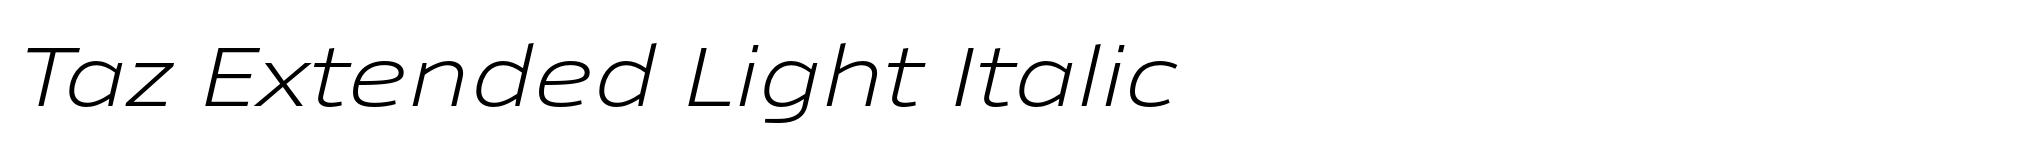 Taz Extended Light Italic image